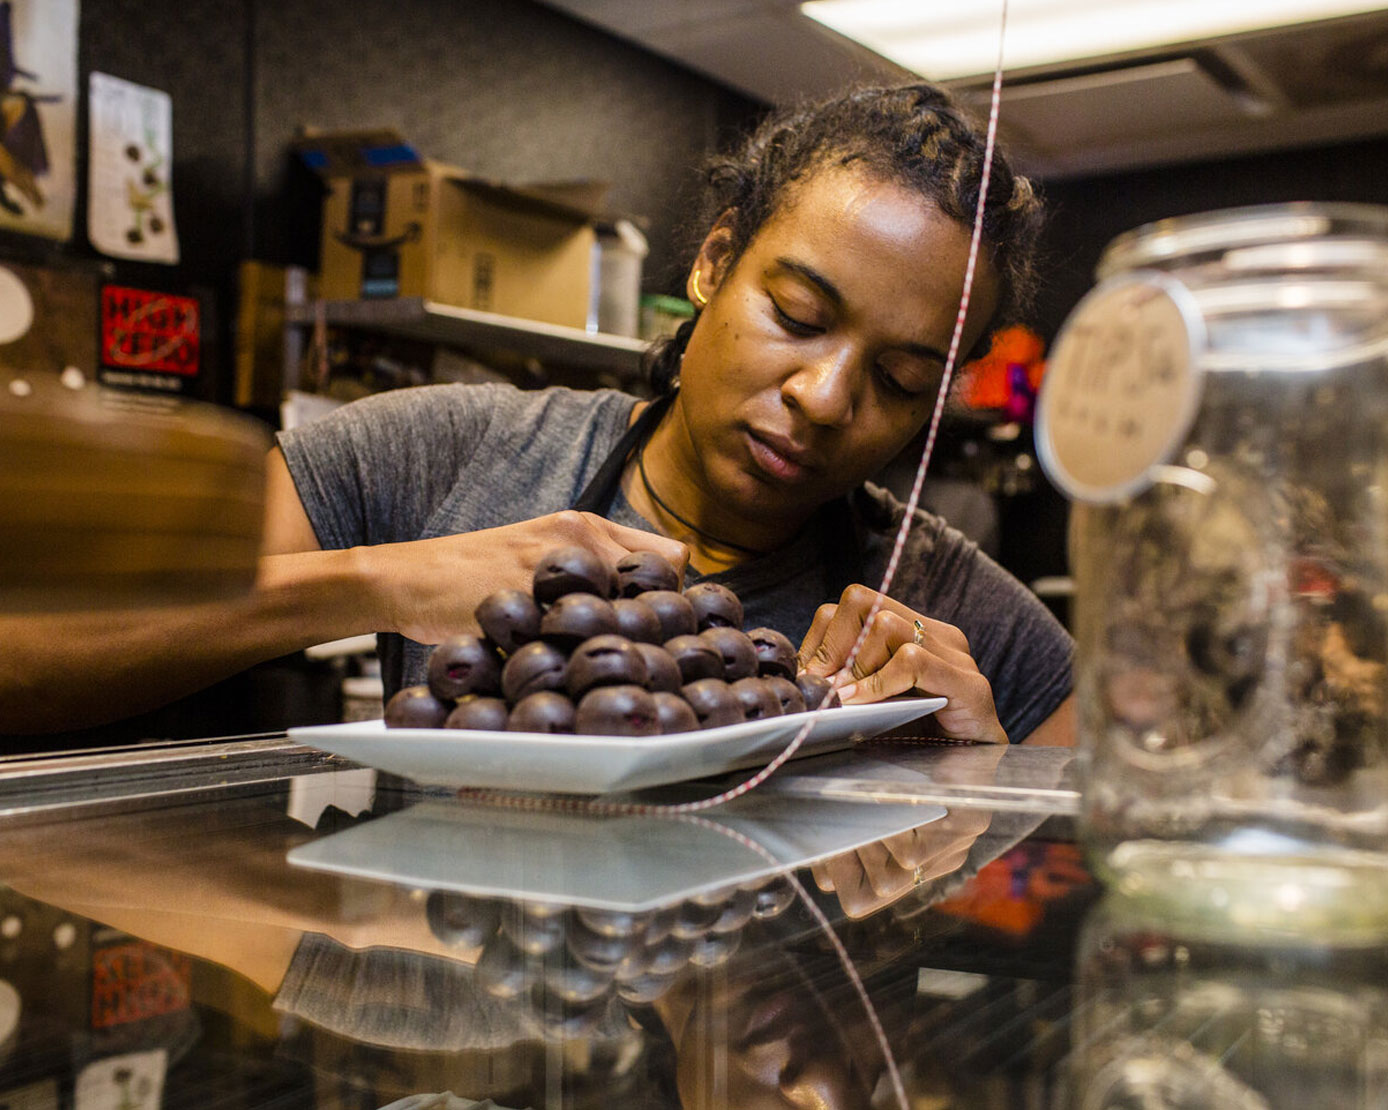 Chef and entrepreneur Jinji Fraser preparing chocolate truffles in her market shop in Baltimore.